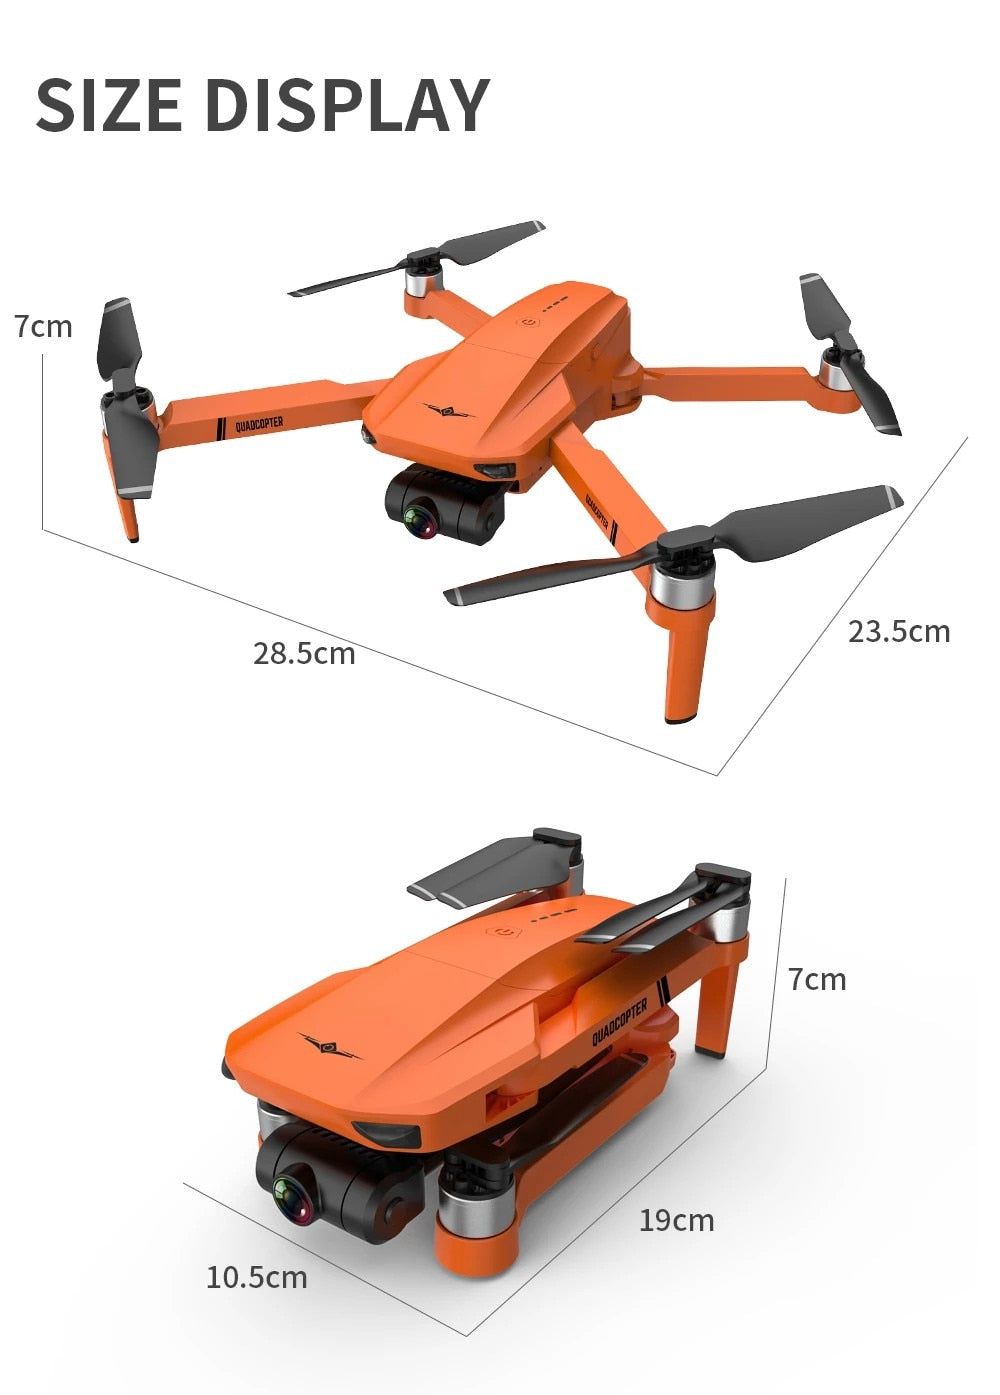 Skylark Pro Drone